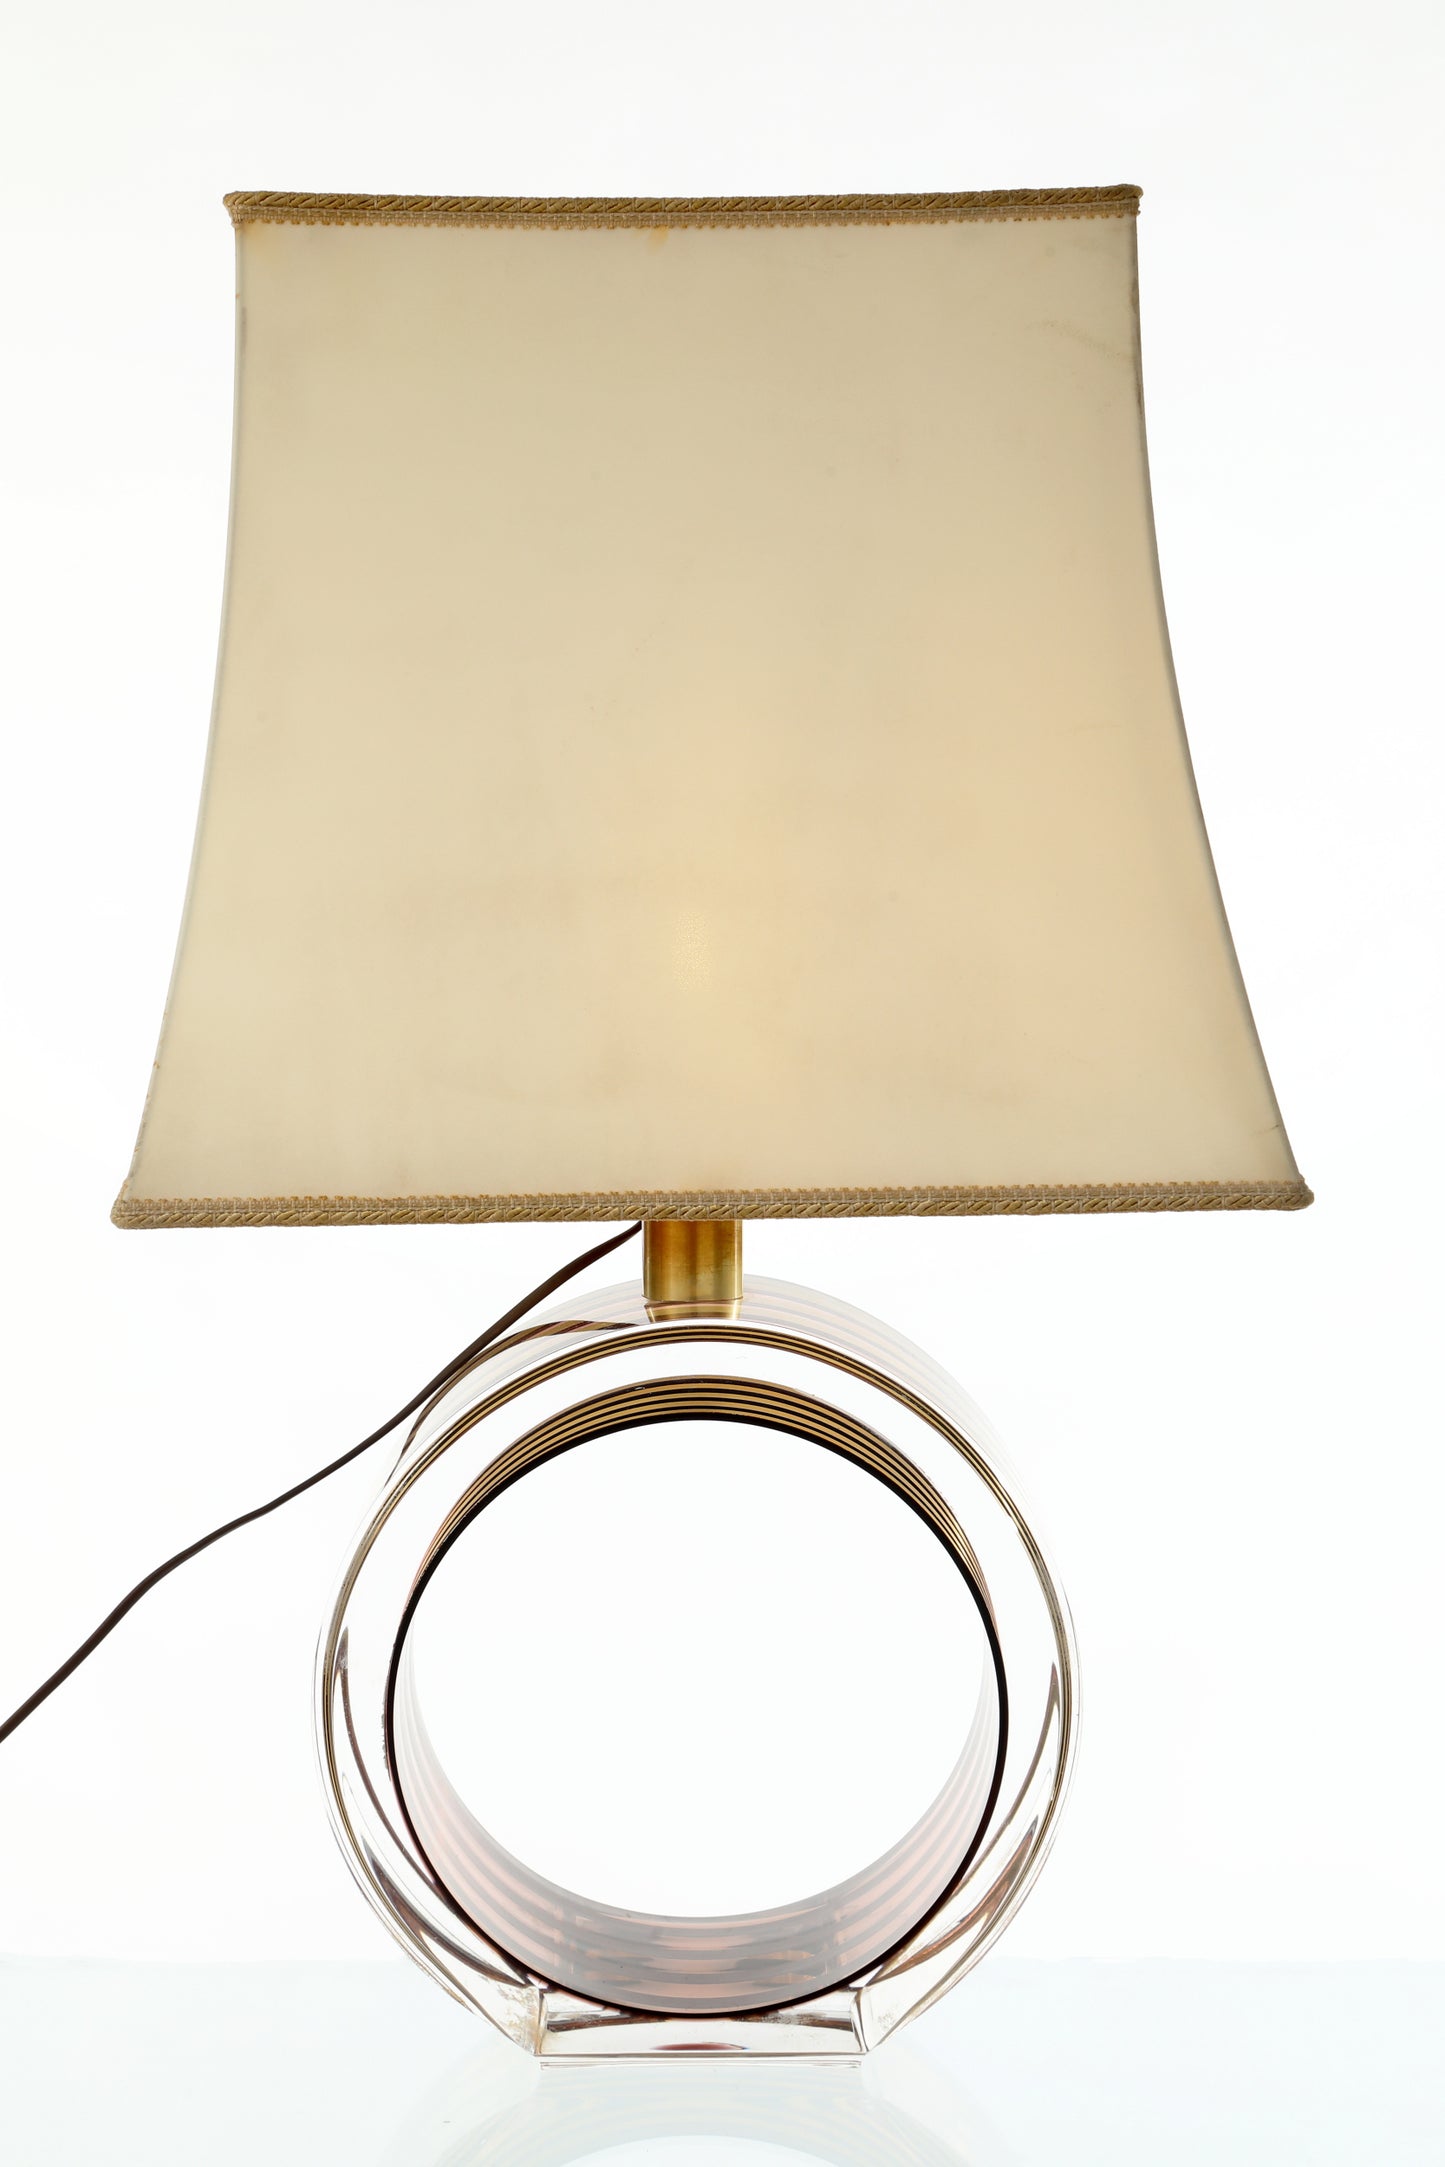 70s plexiglass lamp